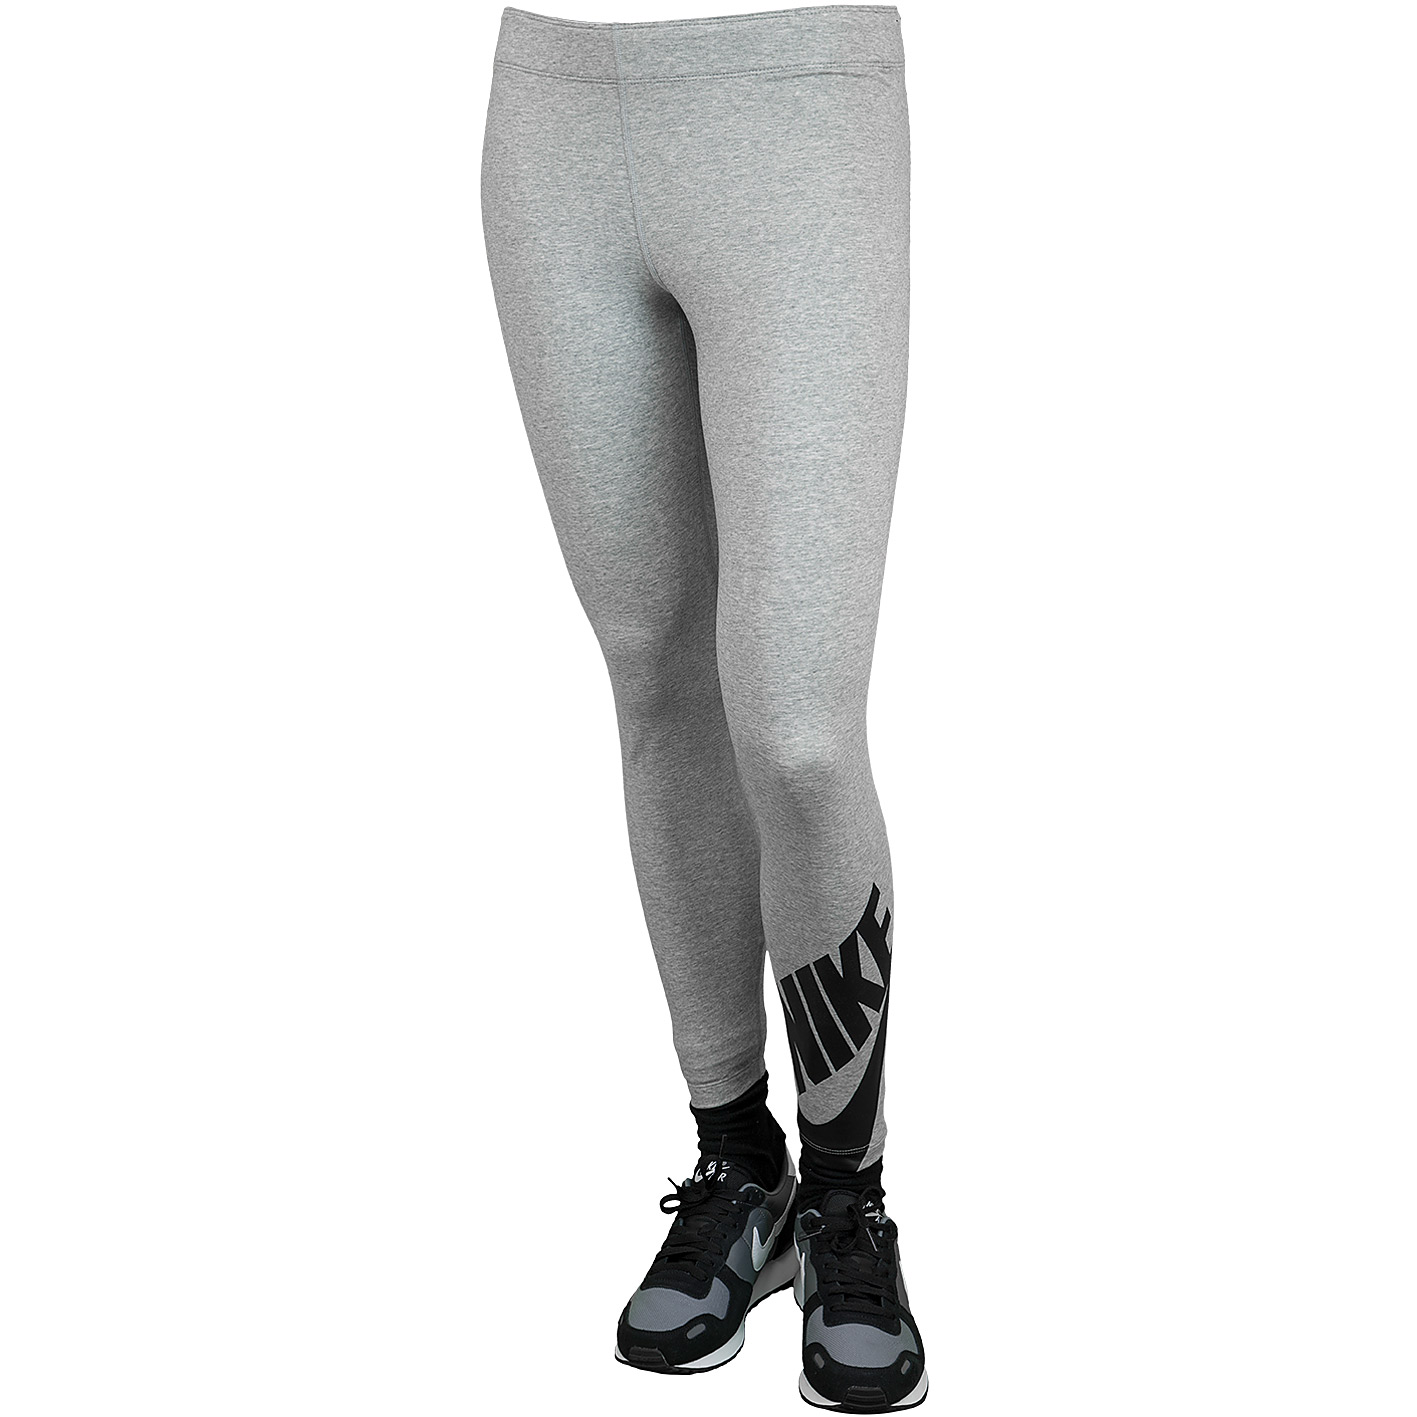 ☆ Nike Leggings Legasee Futura 7/8 grau/schwarz - hier bestellen!